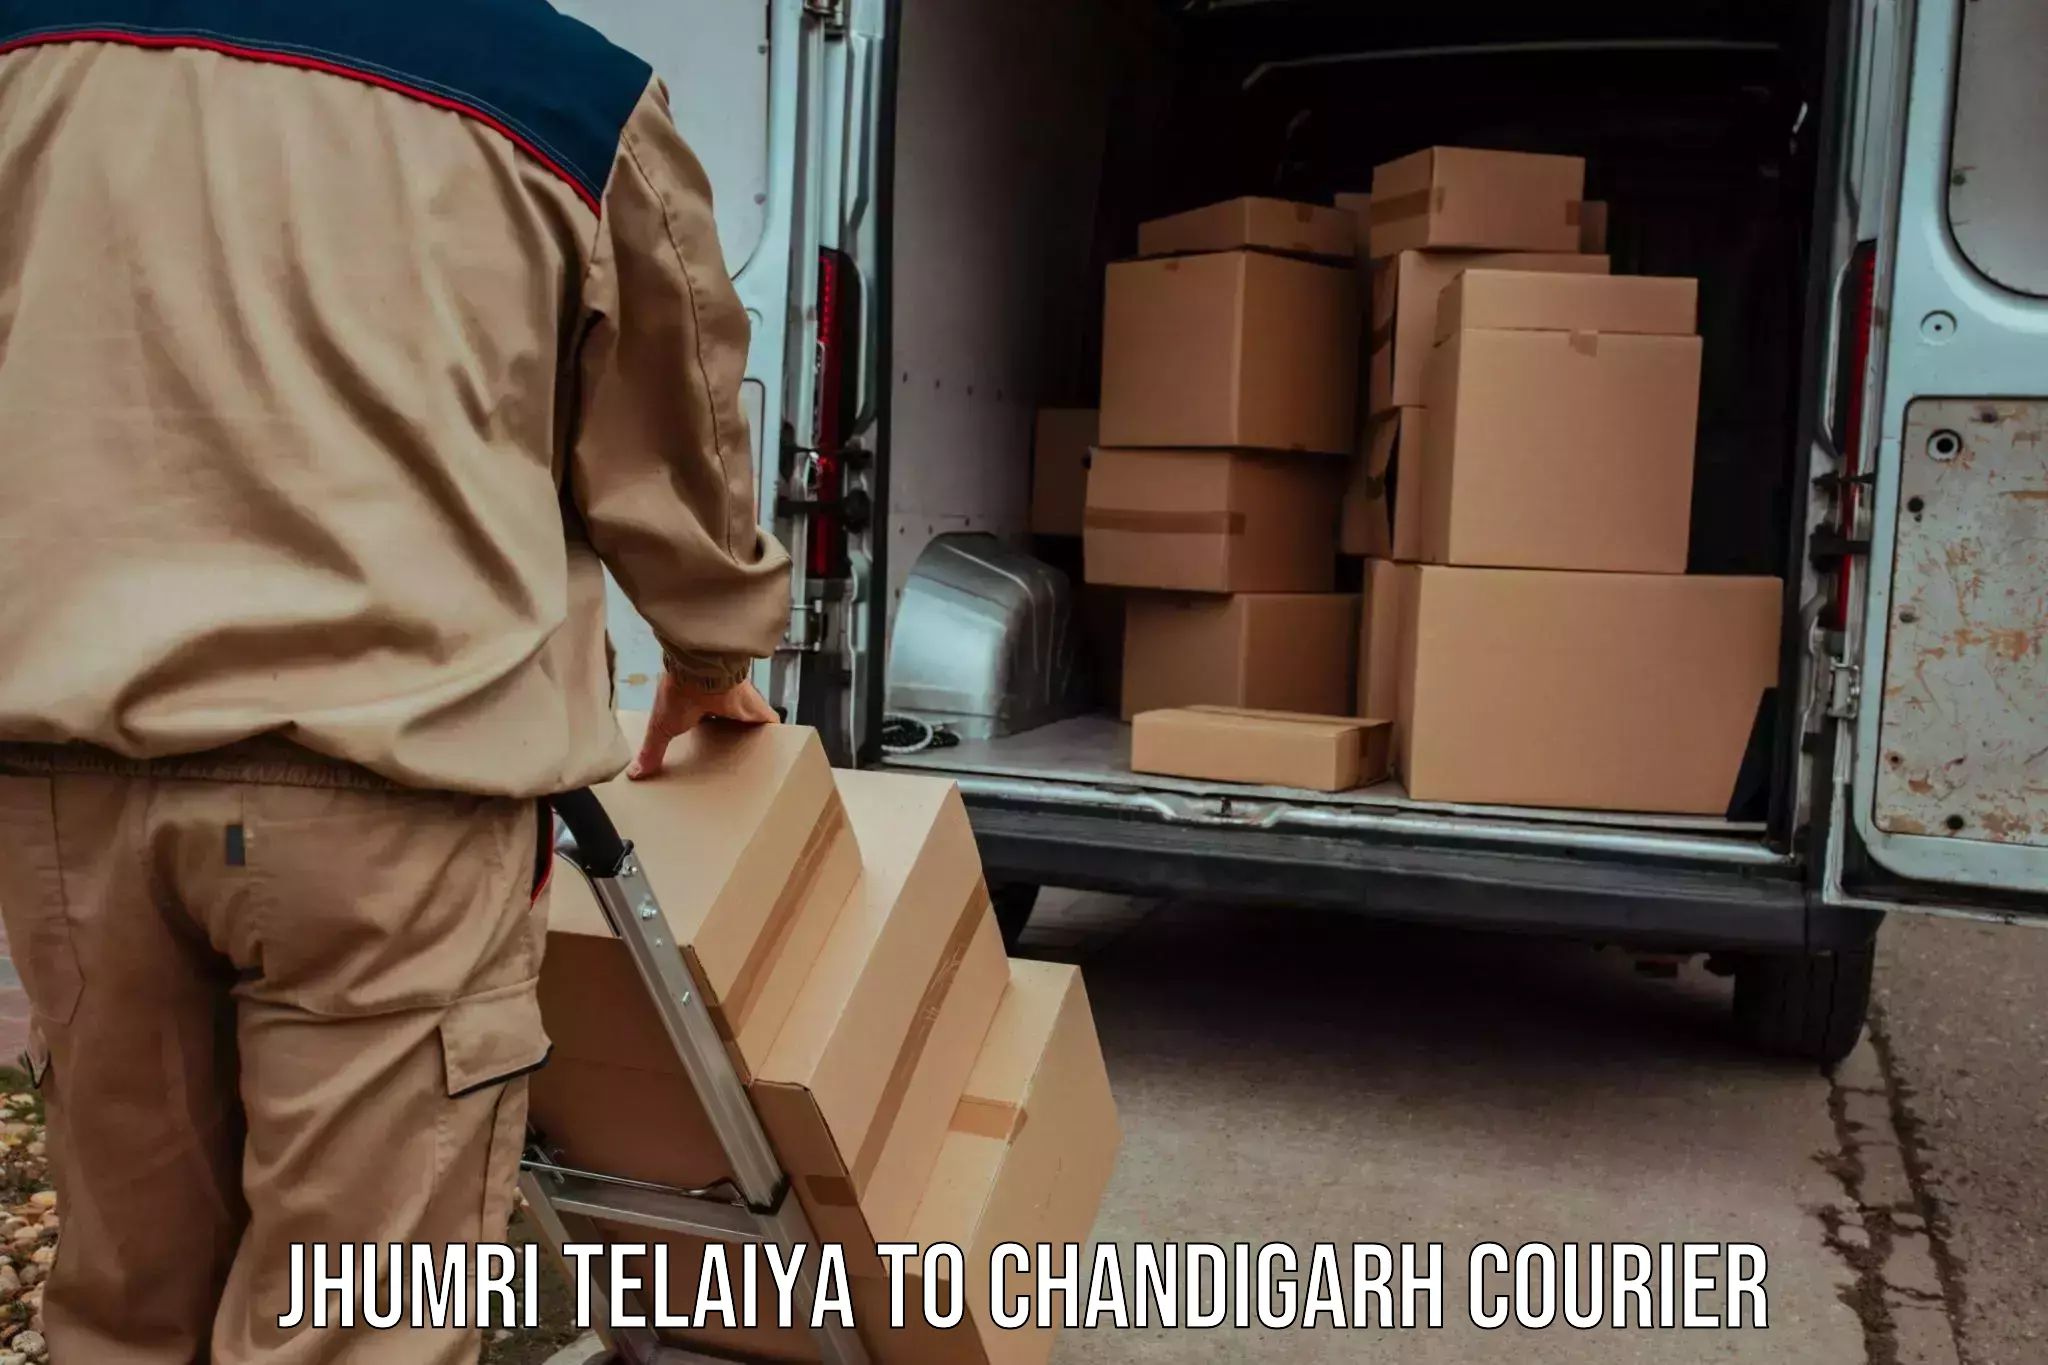 Global courier networks Jhumri Telaiya to Chandigarh